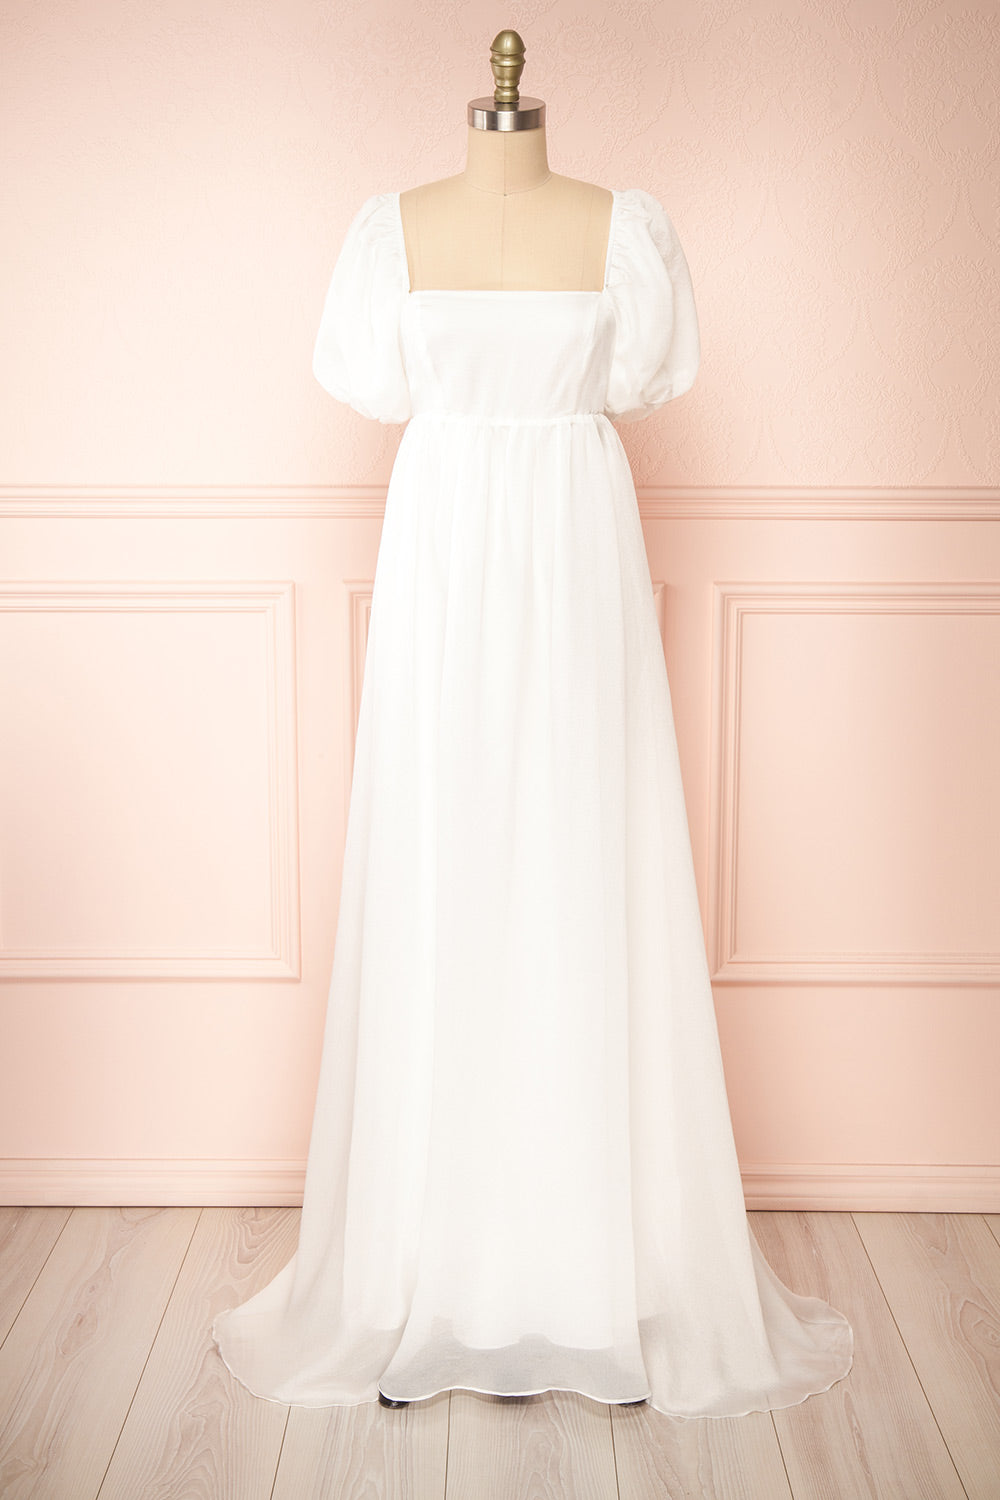 Lace Spaghetti Strap Tulle Empire Waist Wedding Dress - Ever-Pretty US